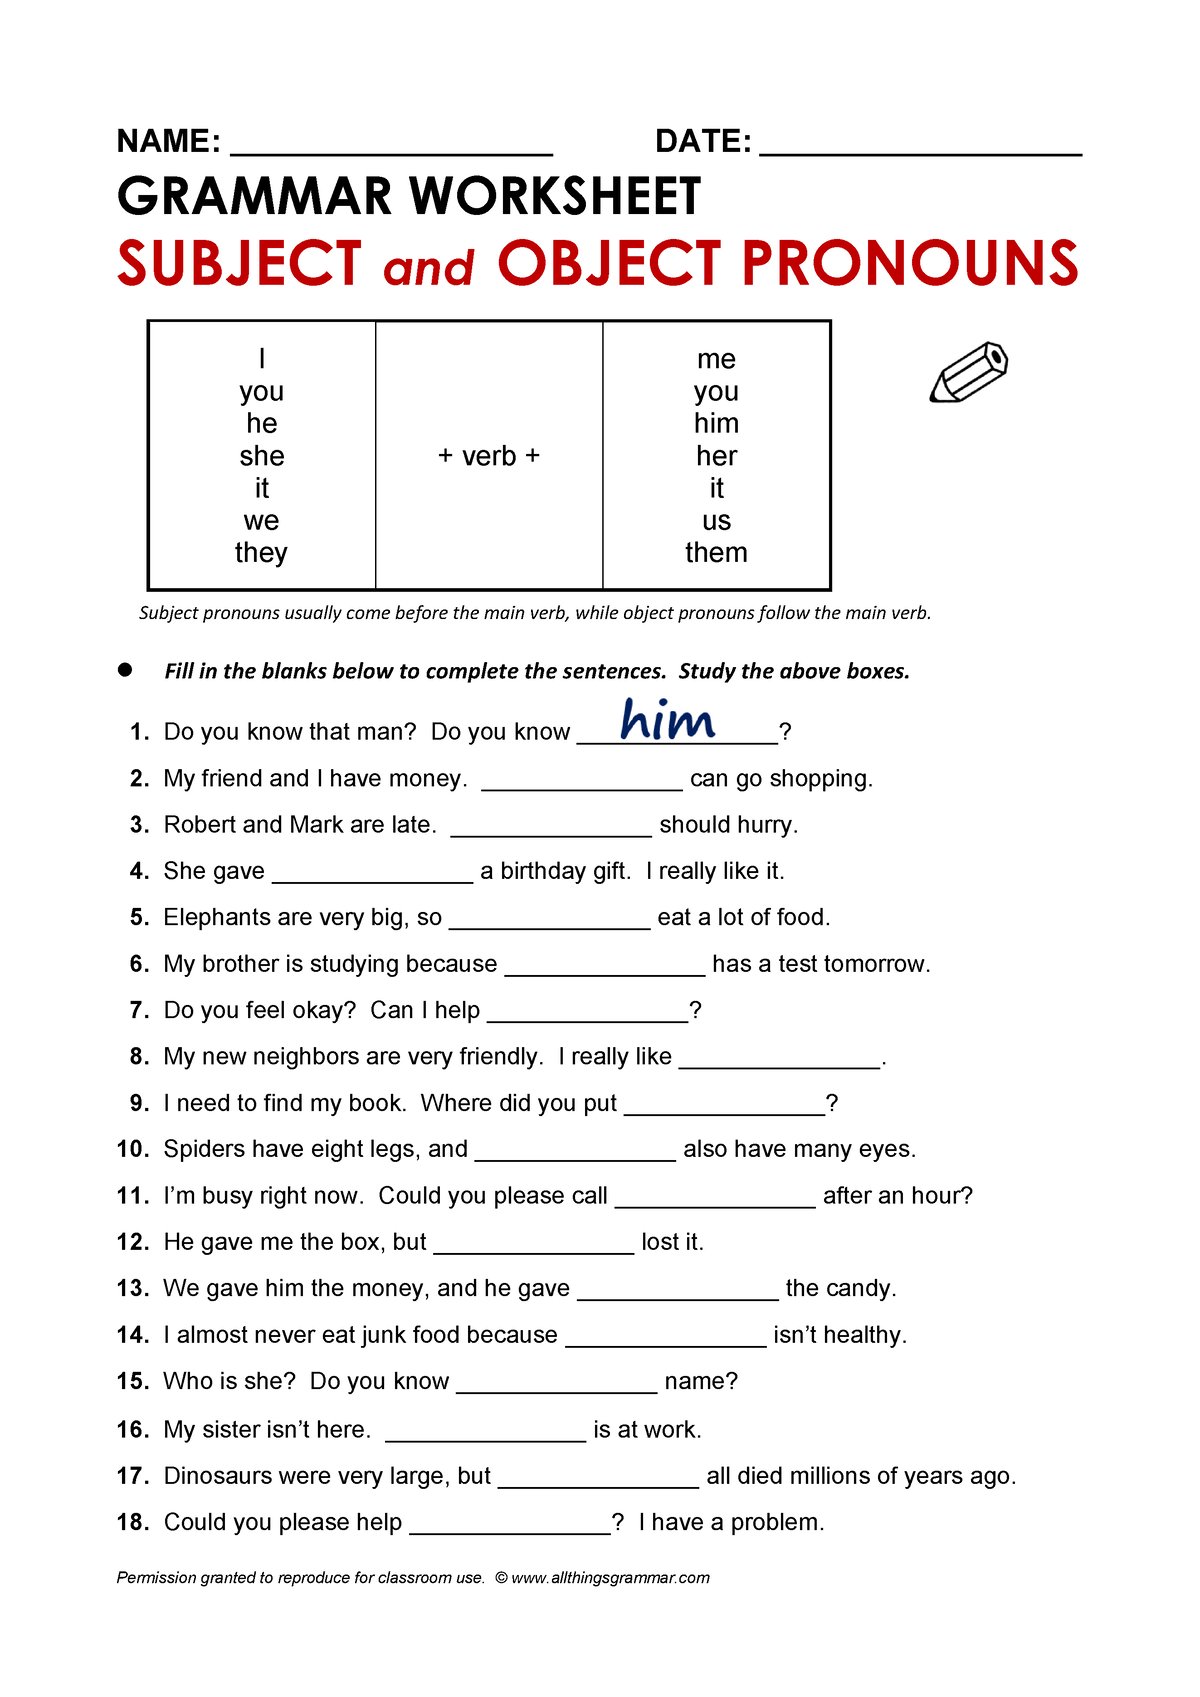 Object Pronouns Worksheet Answer Key